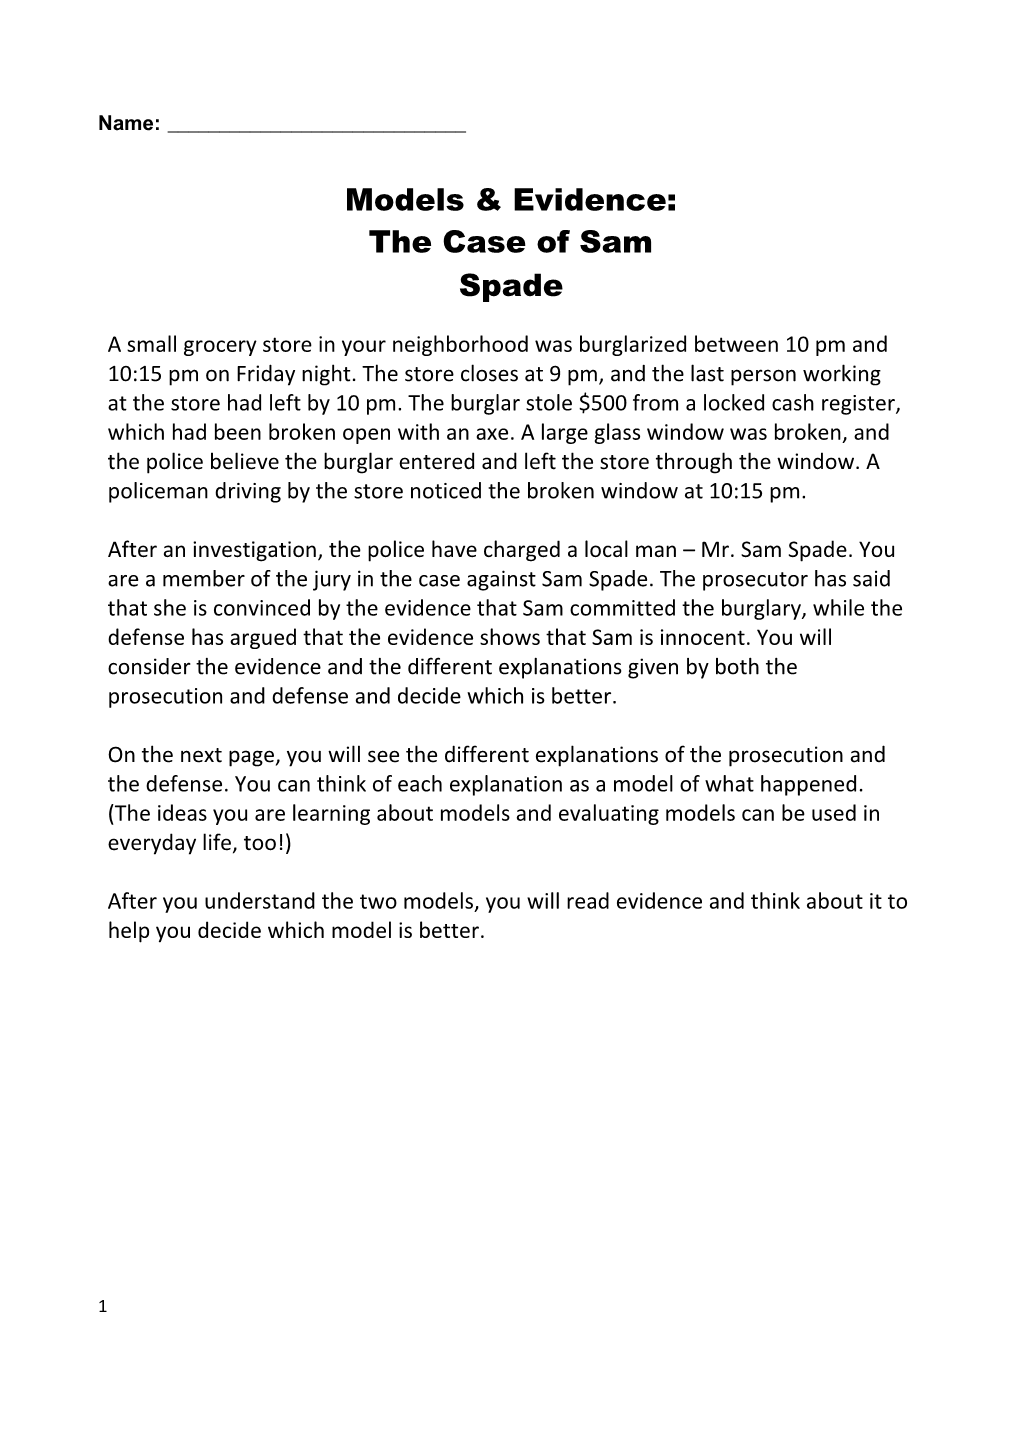 The Case of Sam Spade